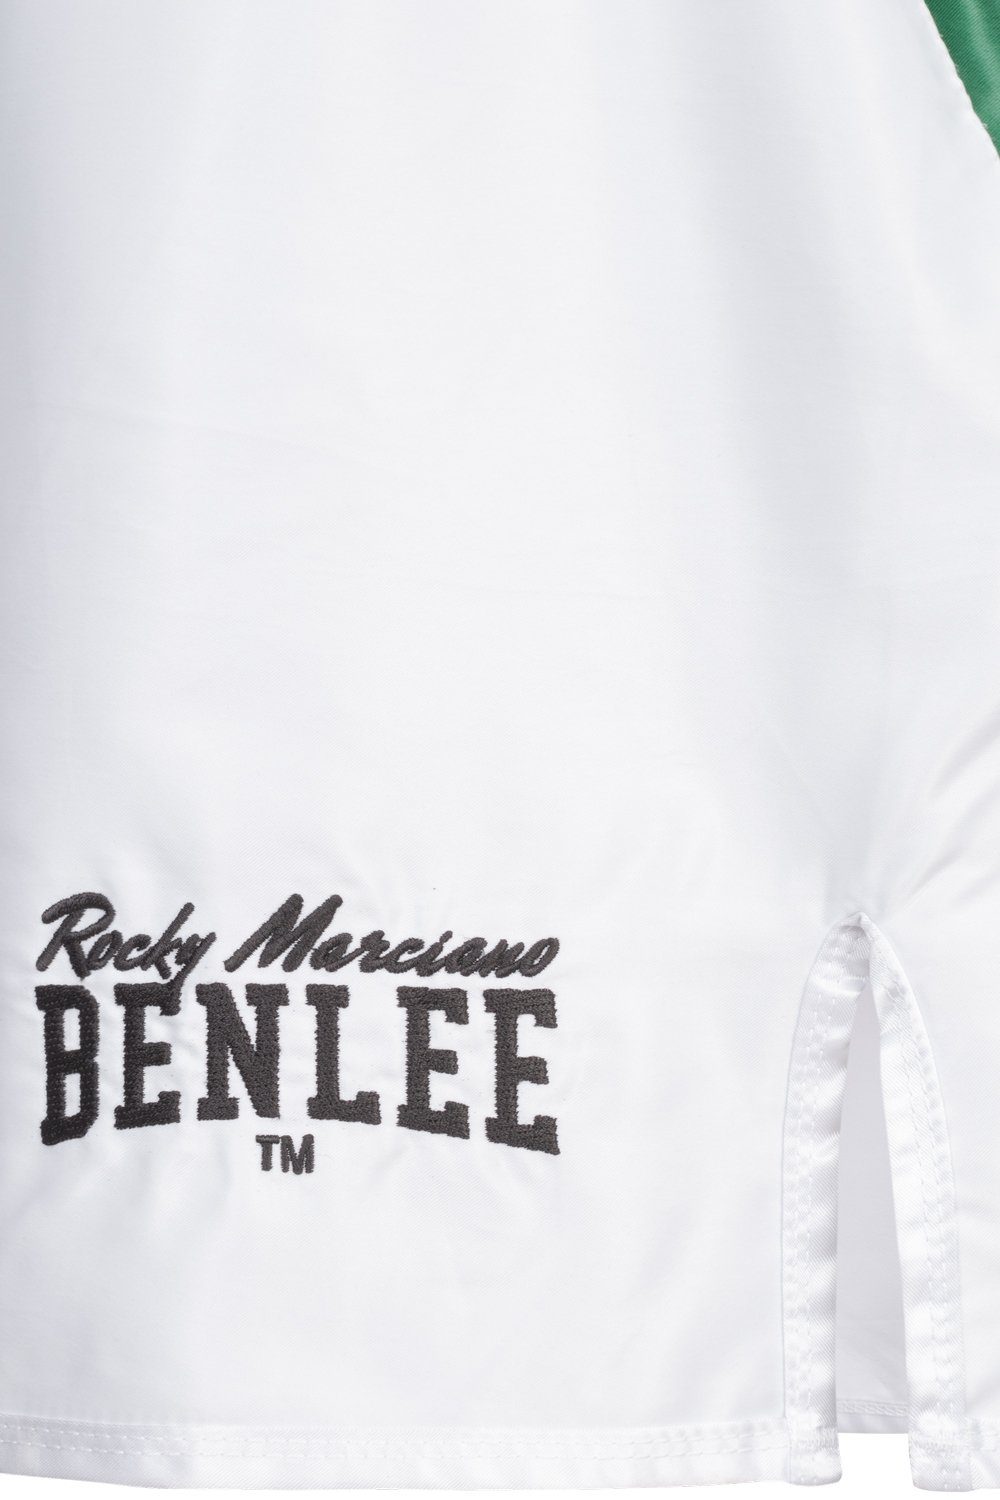 White/Green/Red BONAVENTURE Trainingshose Benlee Marciano Rocky